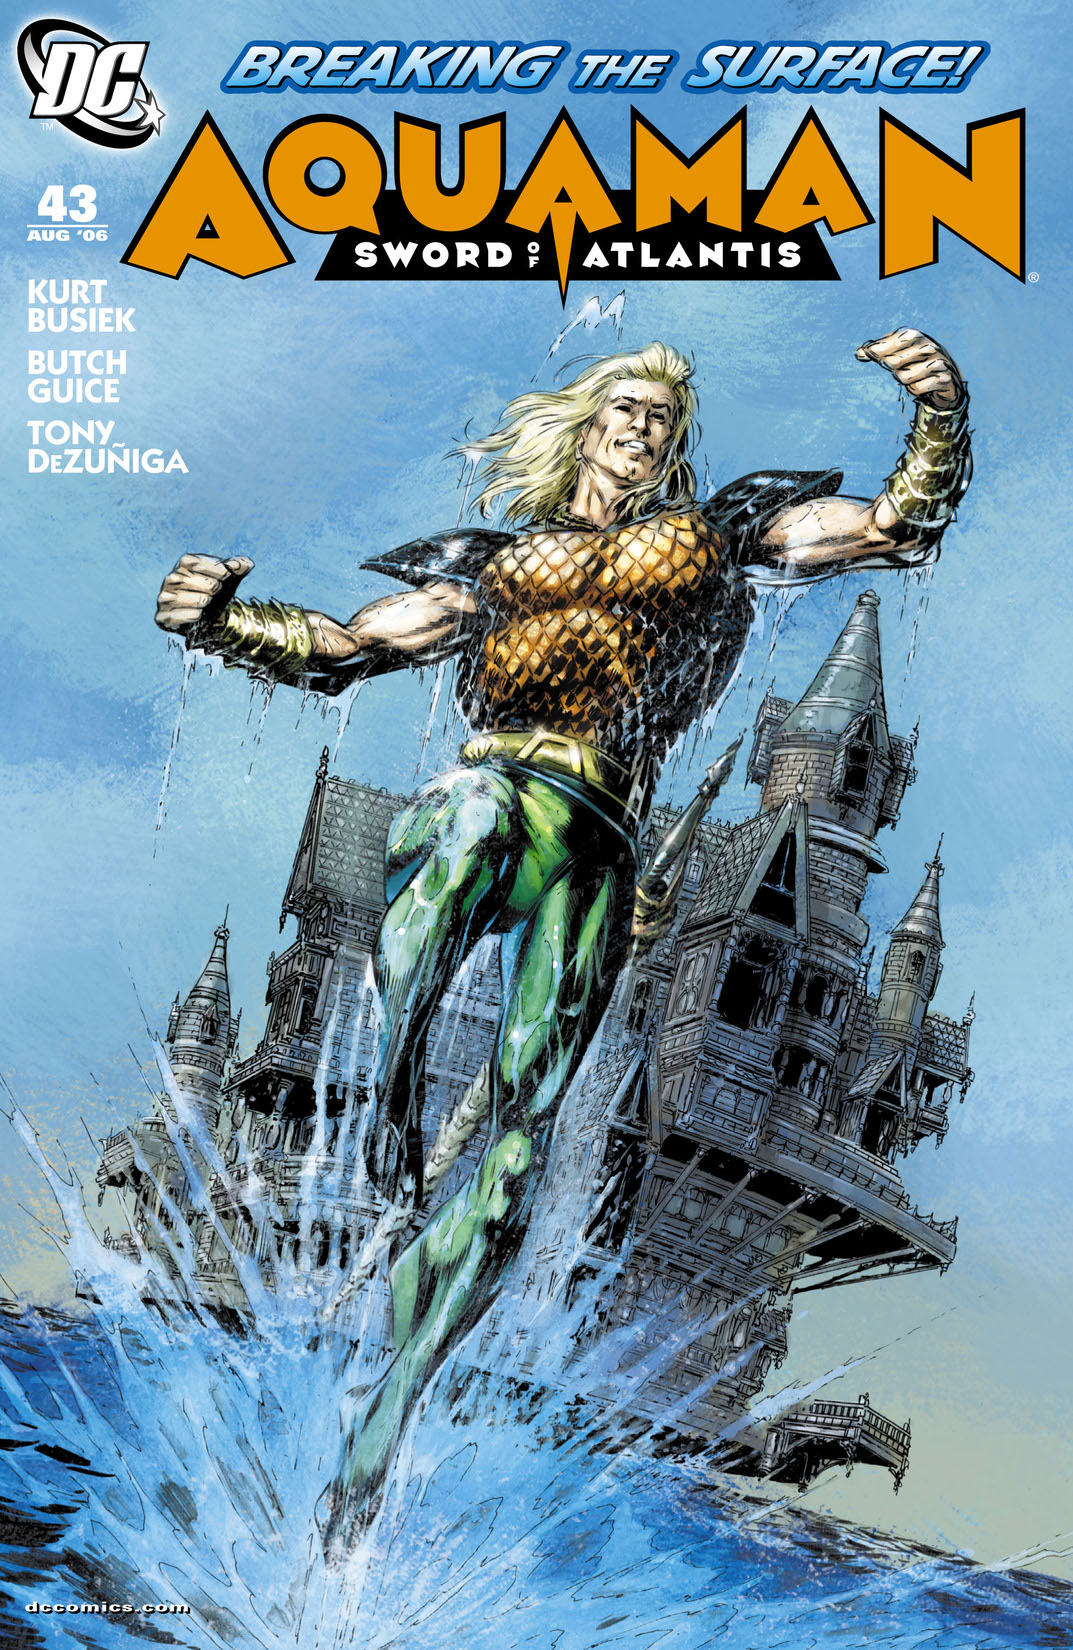 Aquaman (2002-2006) #43 preview images